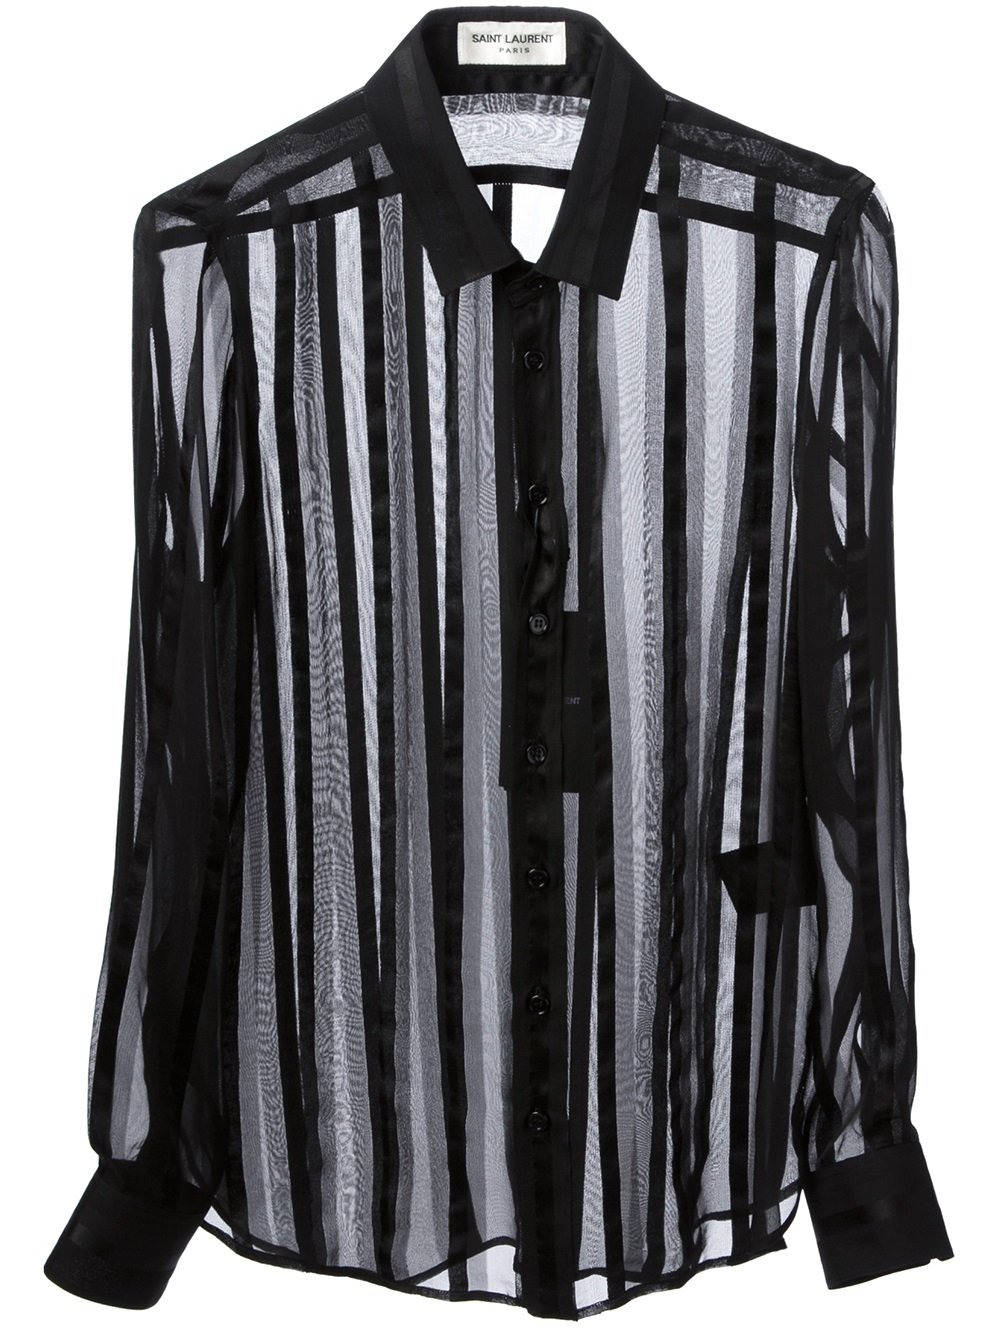 Saint Laurent Sheer Striped Blouse in Black | Lyst